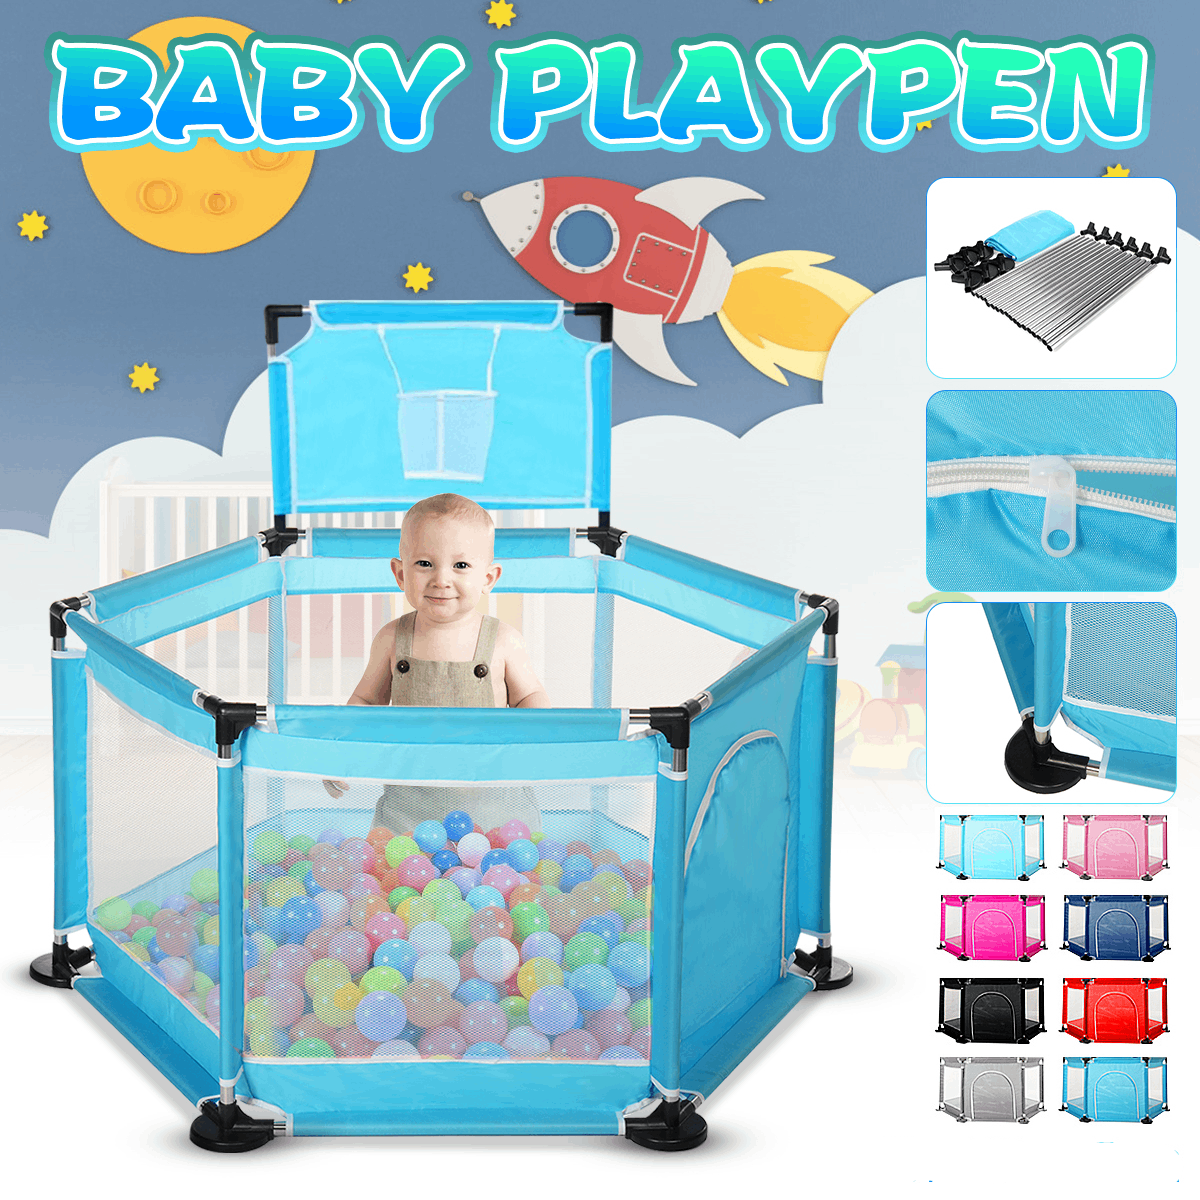 Baby Playpen Interactive Kids Play Playpen Ocean Balls Games Safety Gate Baby Toddler Fence